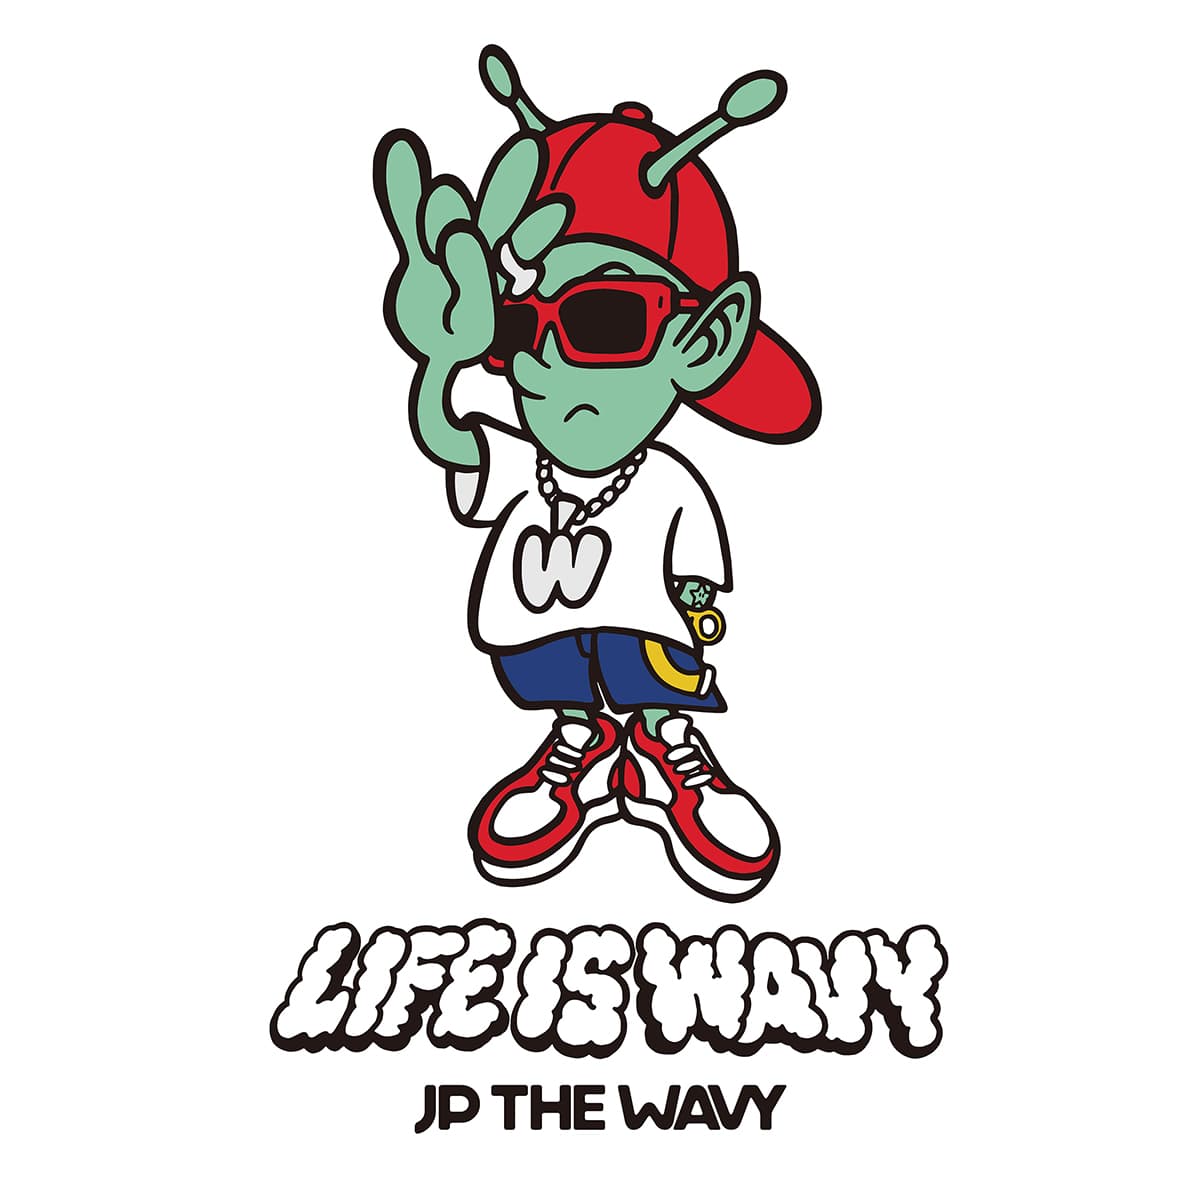 JP THE WAVY 1st Alubm “LIFE IS WAVY” Release